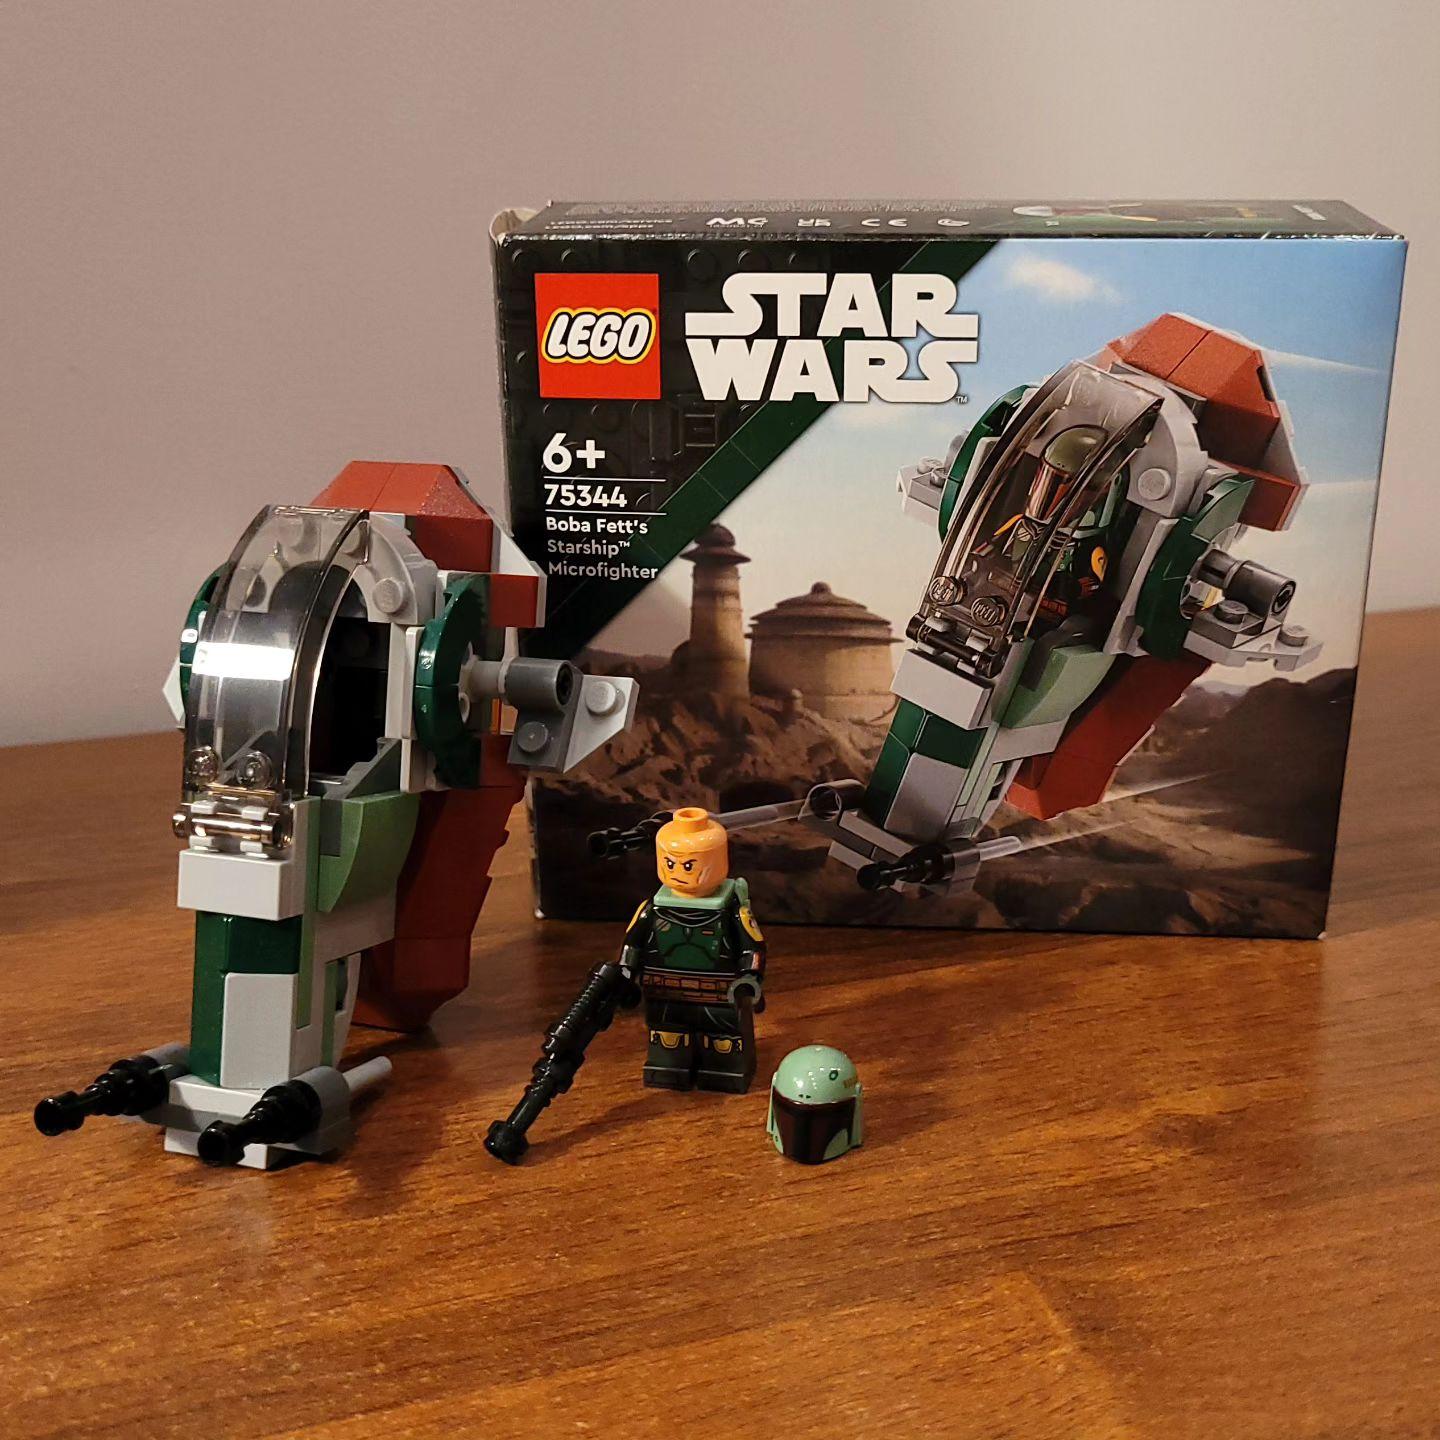 LEGO Star Wars Boba Fett's Starship Microfighter 75344 | Mr Toys